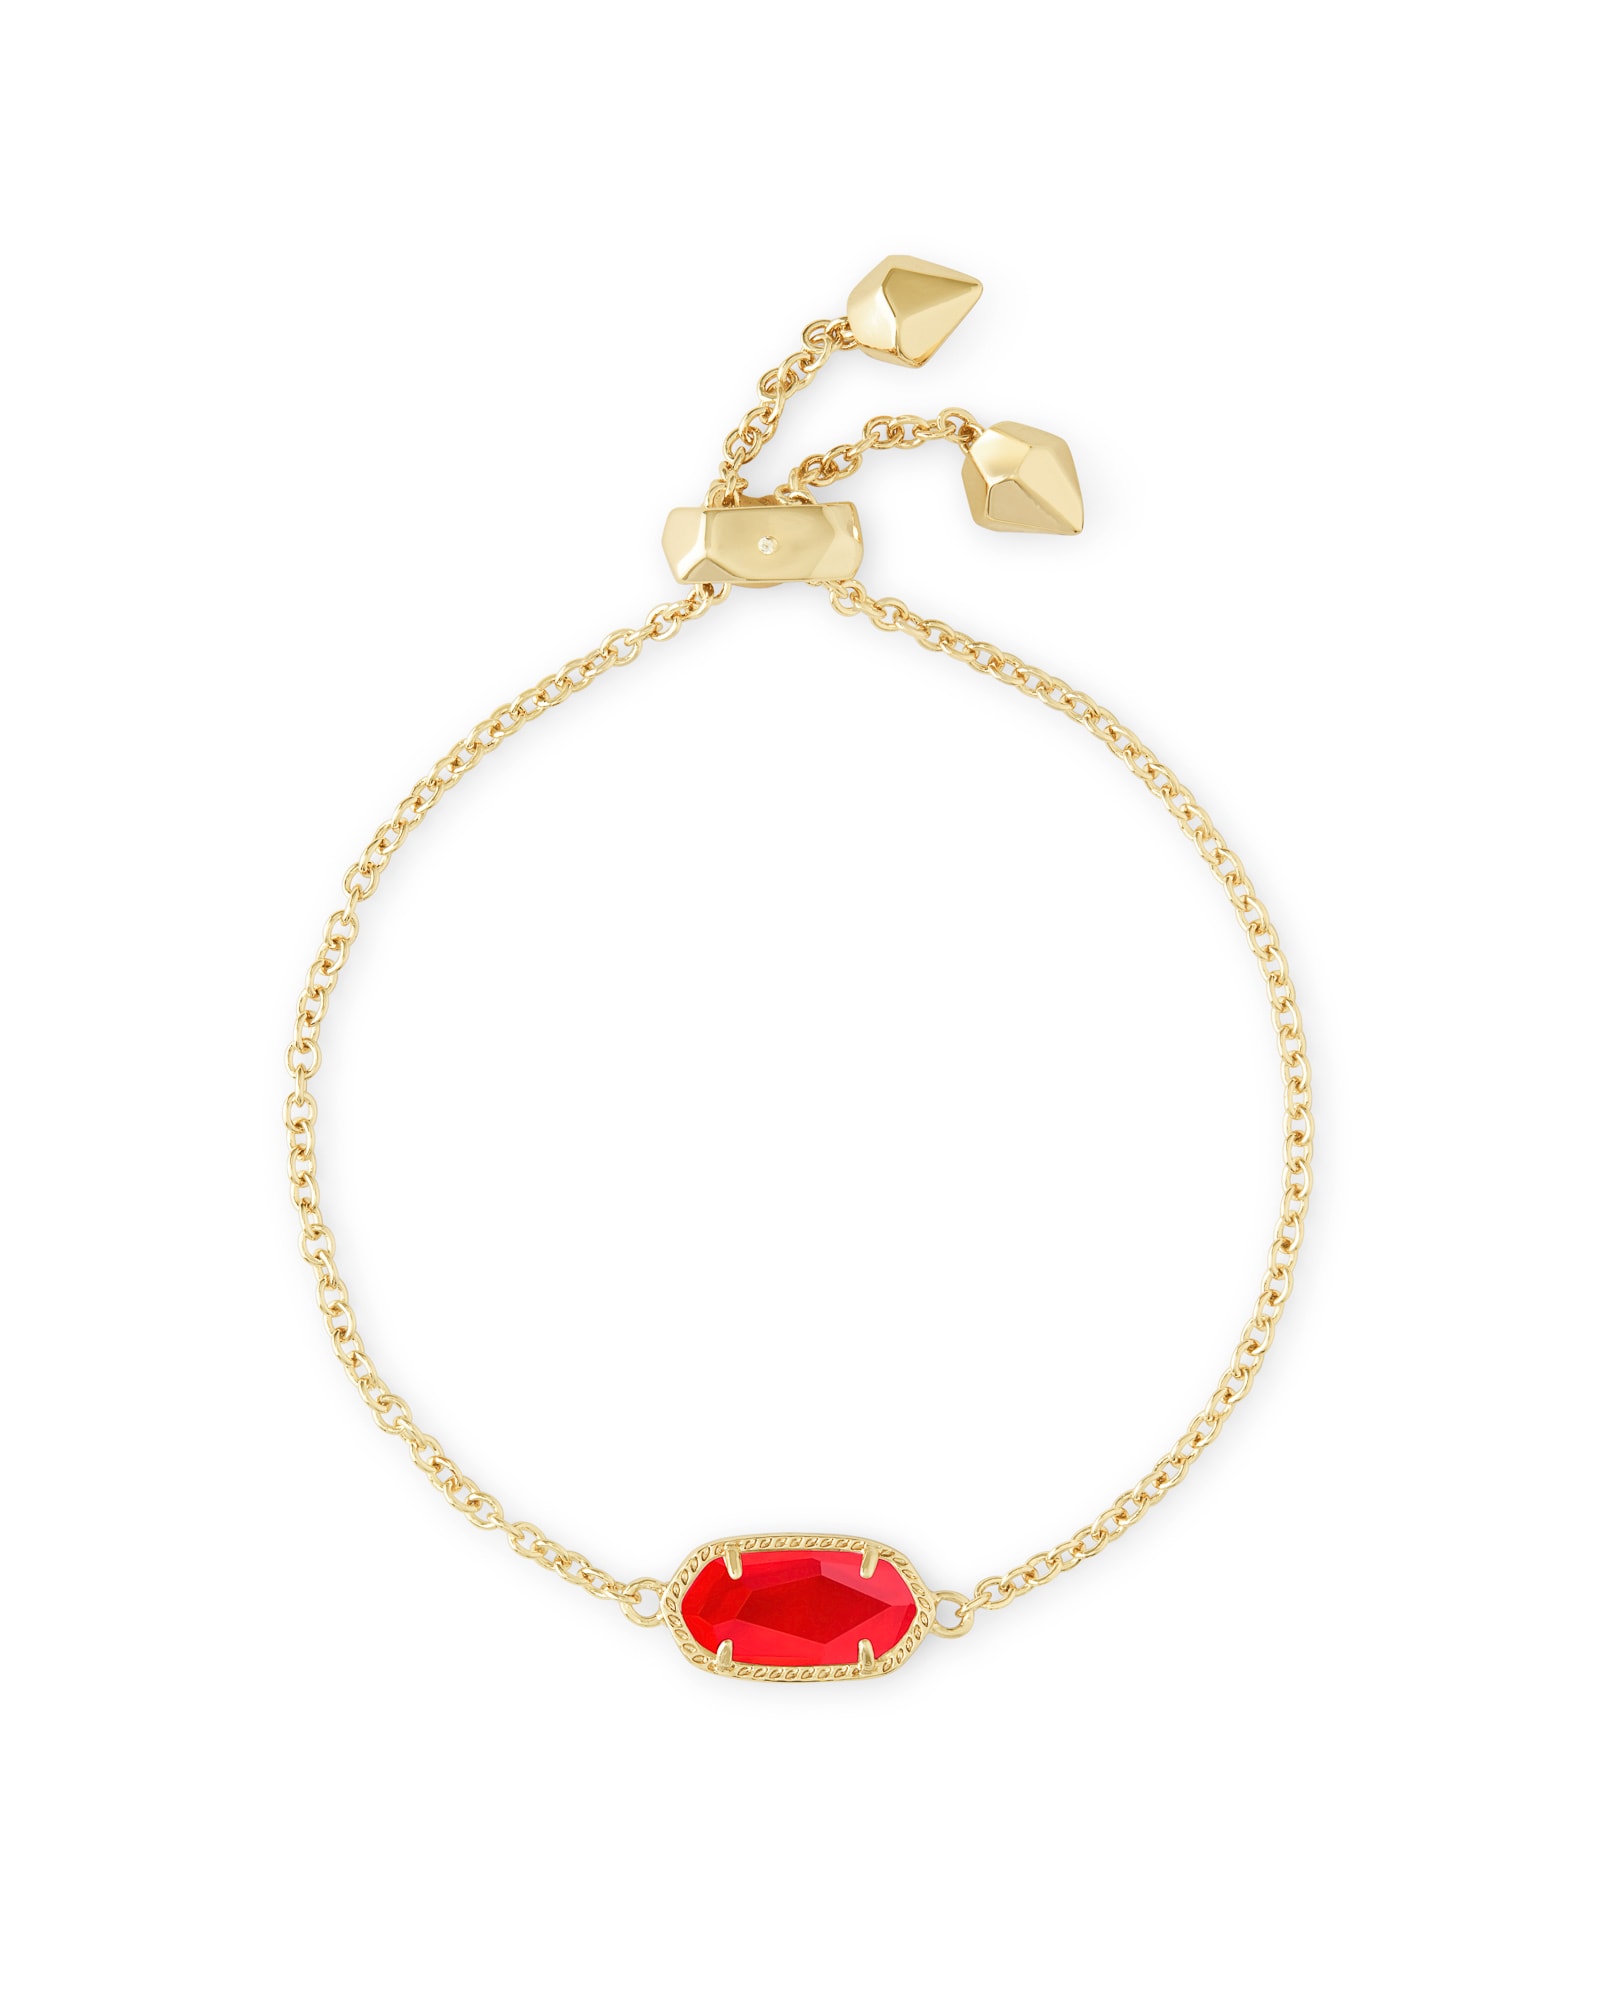 Elaina Gold Adjustable Chain Bracelet in Red Illusion | Kendra Scott